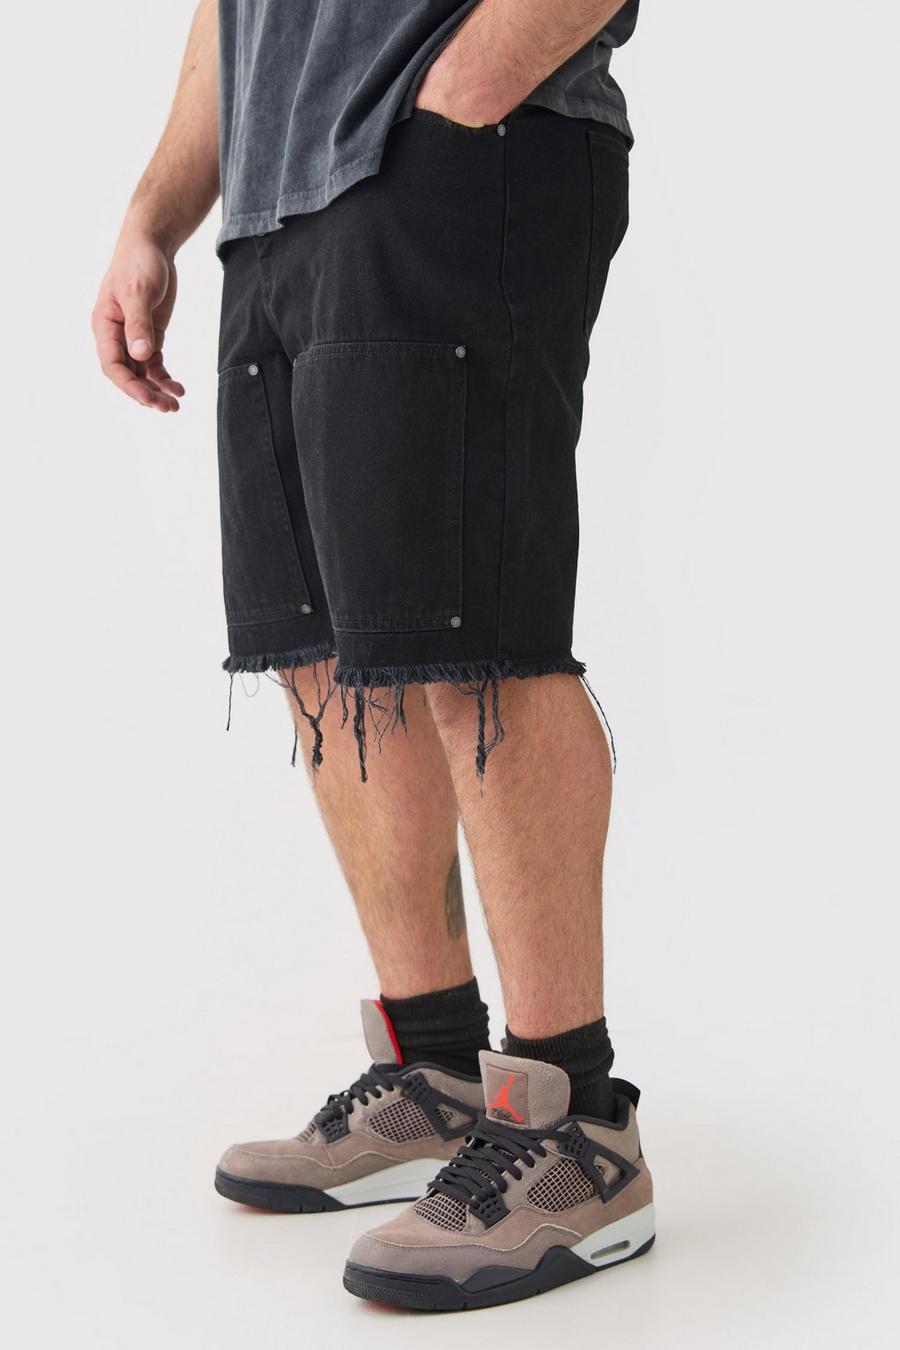 Pantalón corto Plus de sarga holgado estilo carpintero con cintura fija y lavado a la piedra, Black